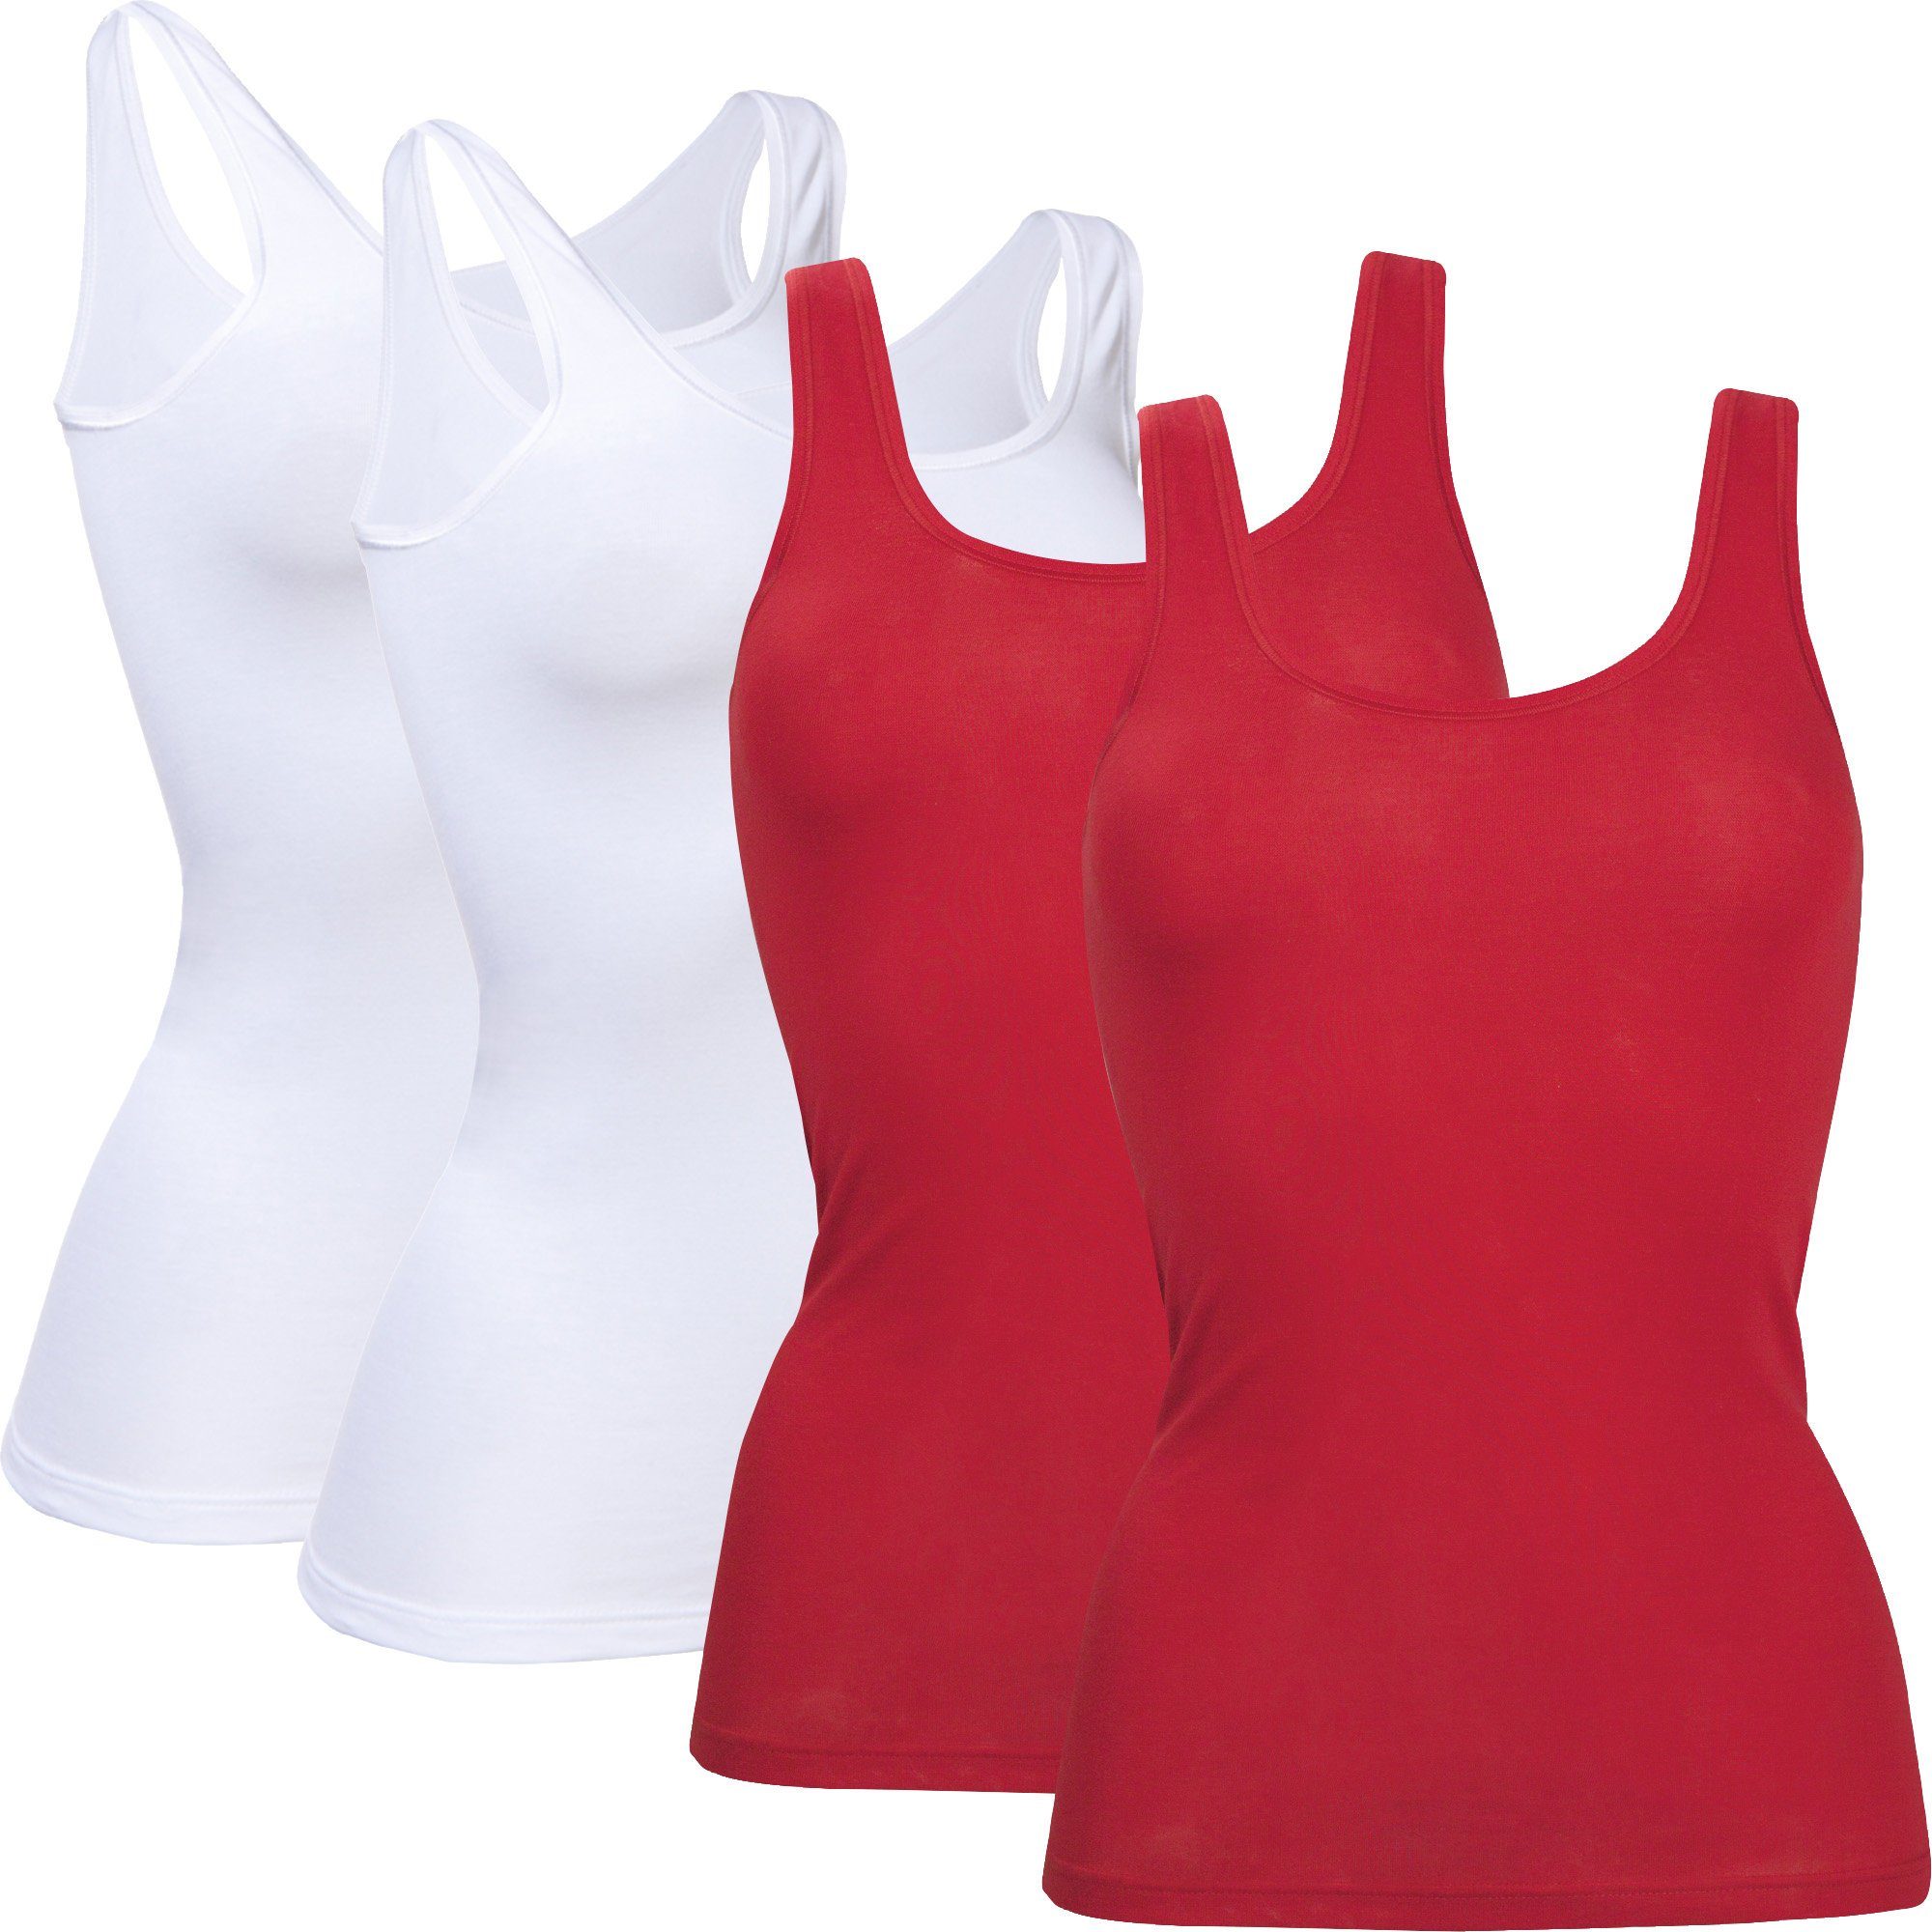 Damen-Unterhemd Unterhemd 4er-Pack weiß/rot Uni conta Feinripp